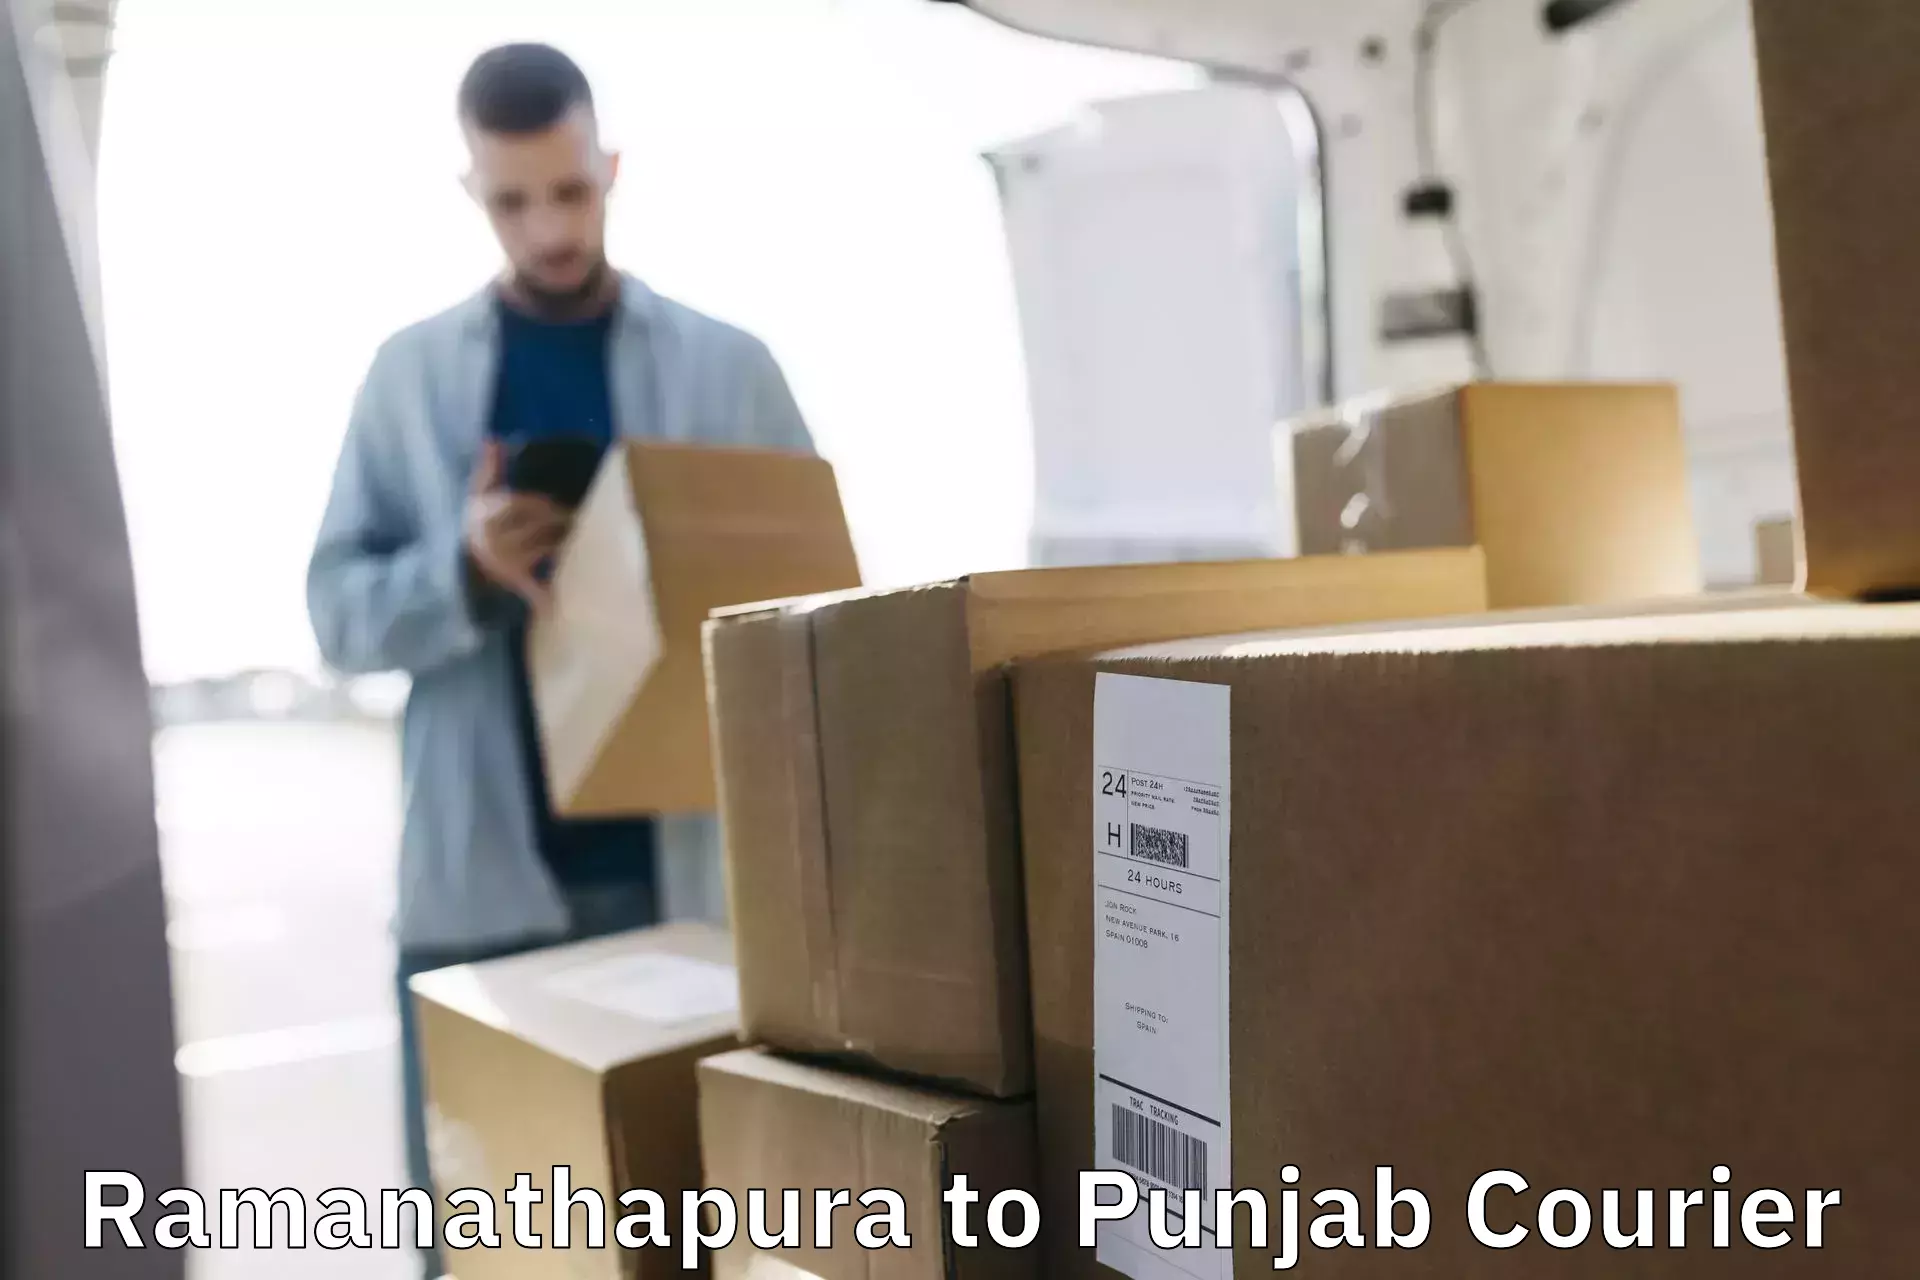 Courier service innovation Ramanathapura to Dera Bassi